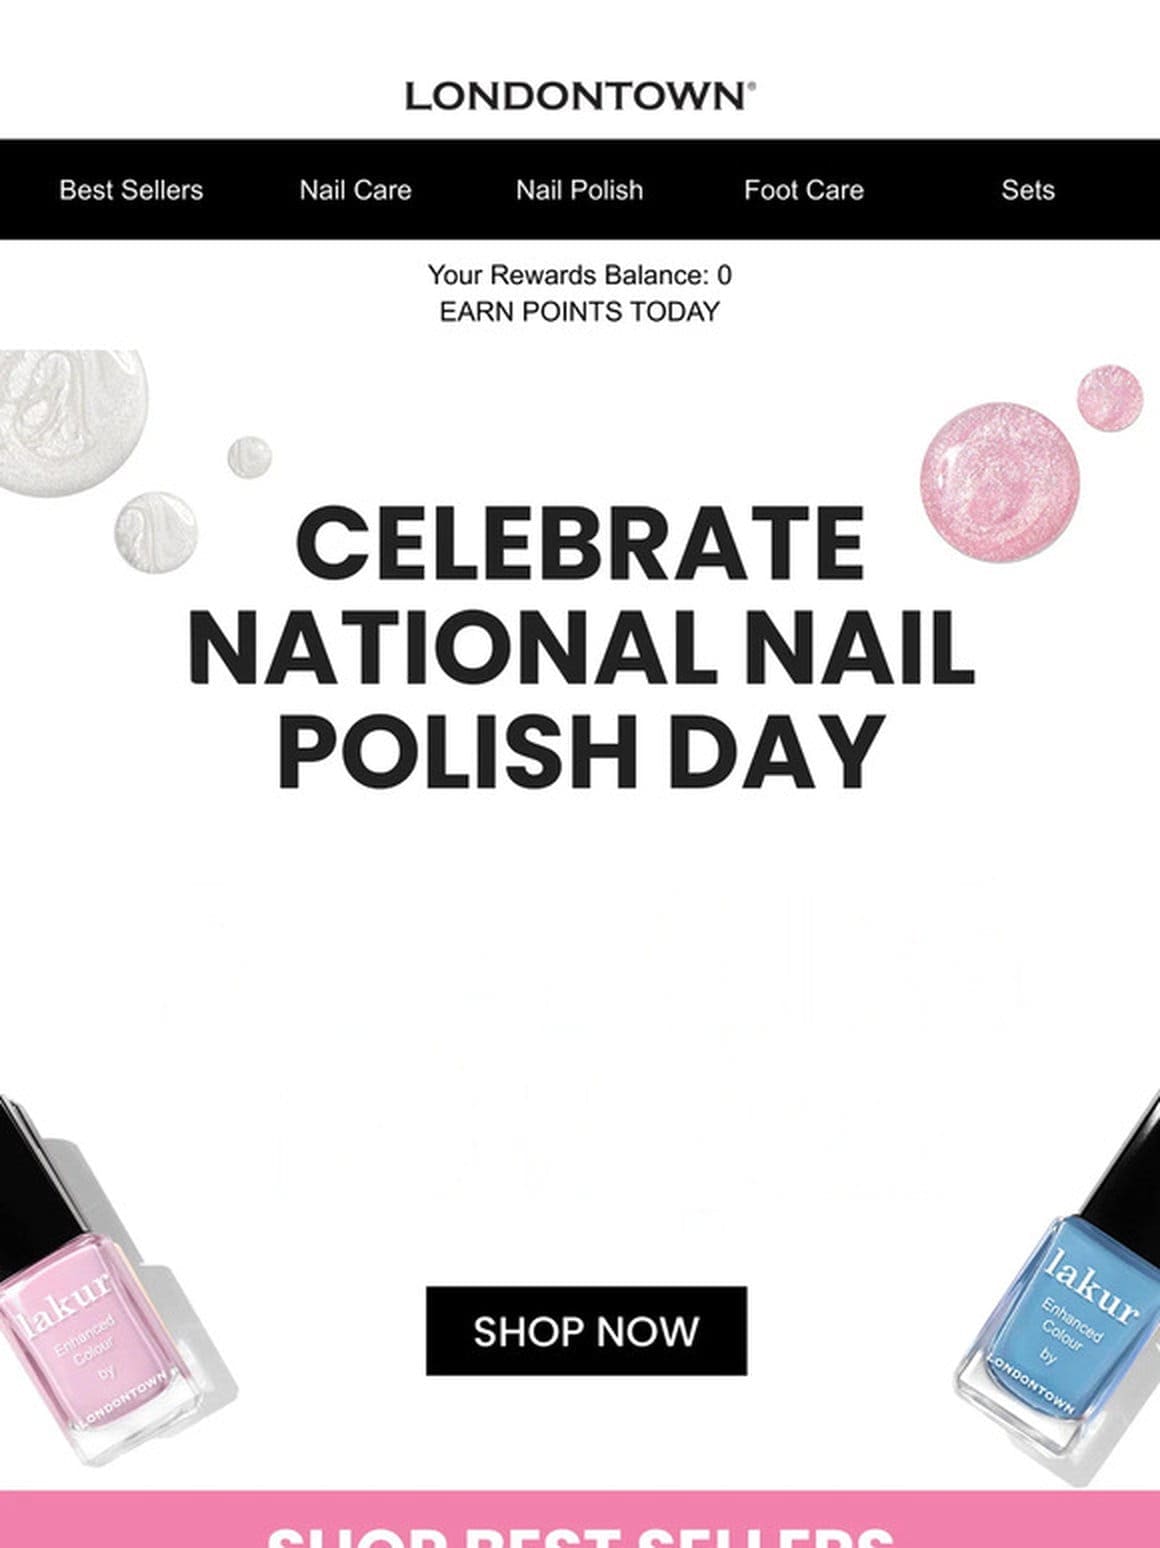 Happy National Nail Polish Day!